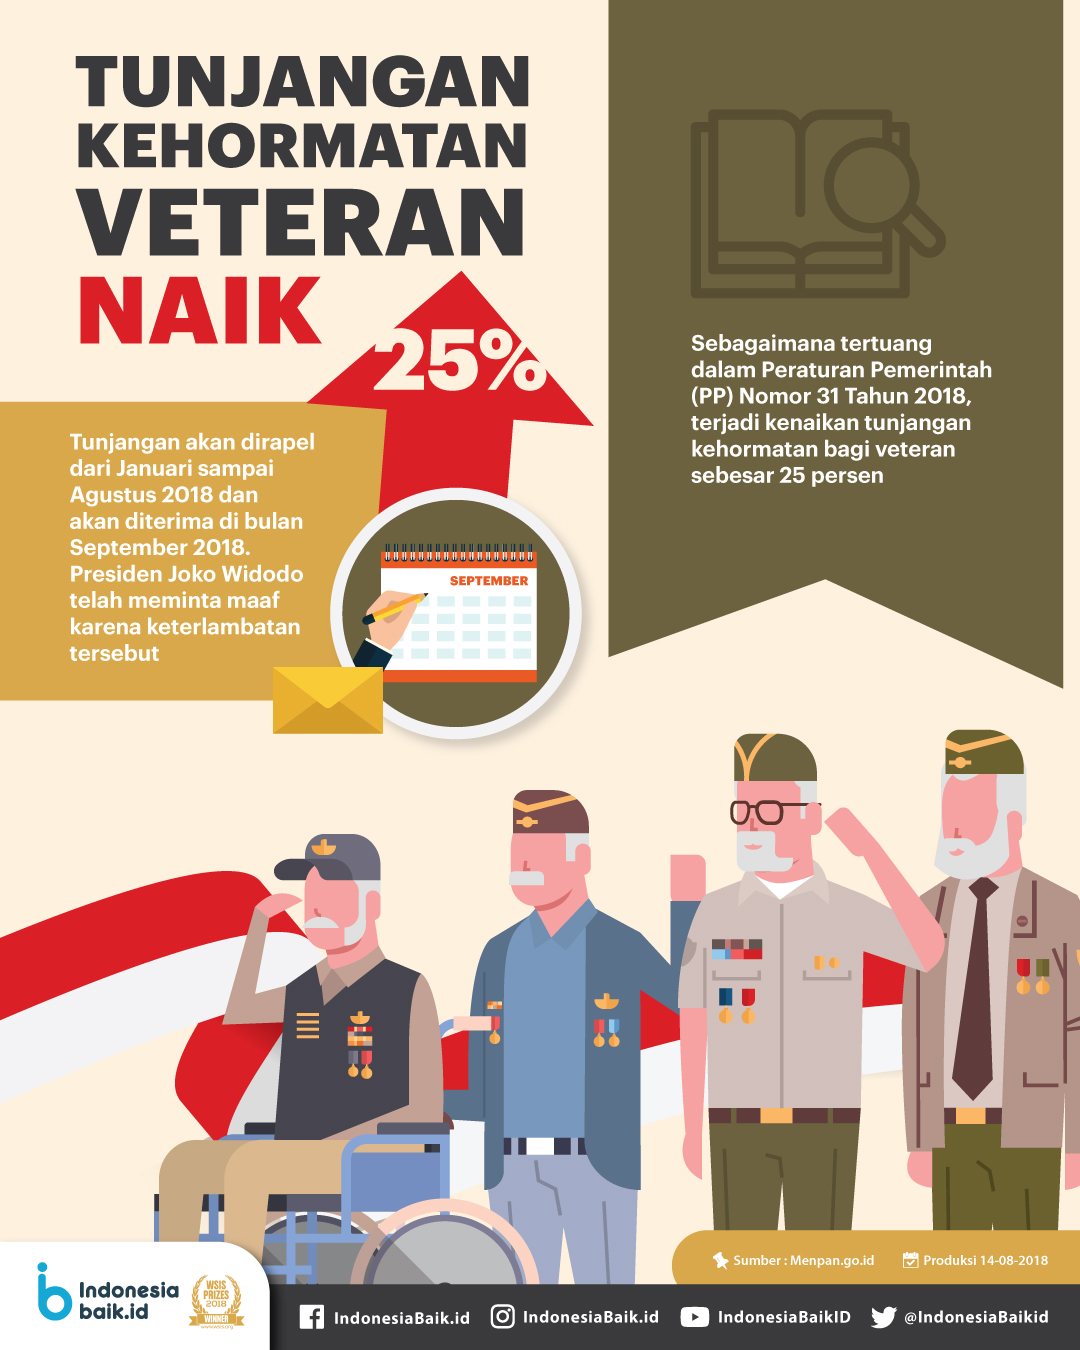 Tunjangan Kehormatan Veteran Naik 25%